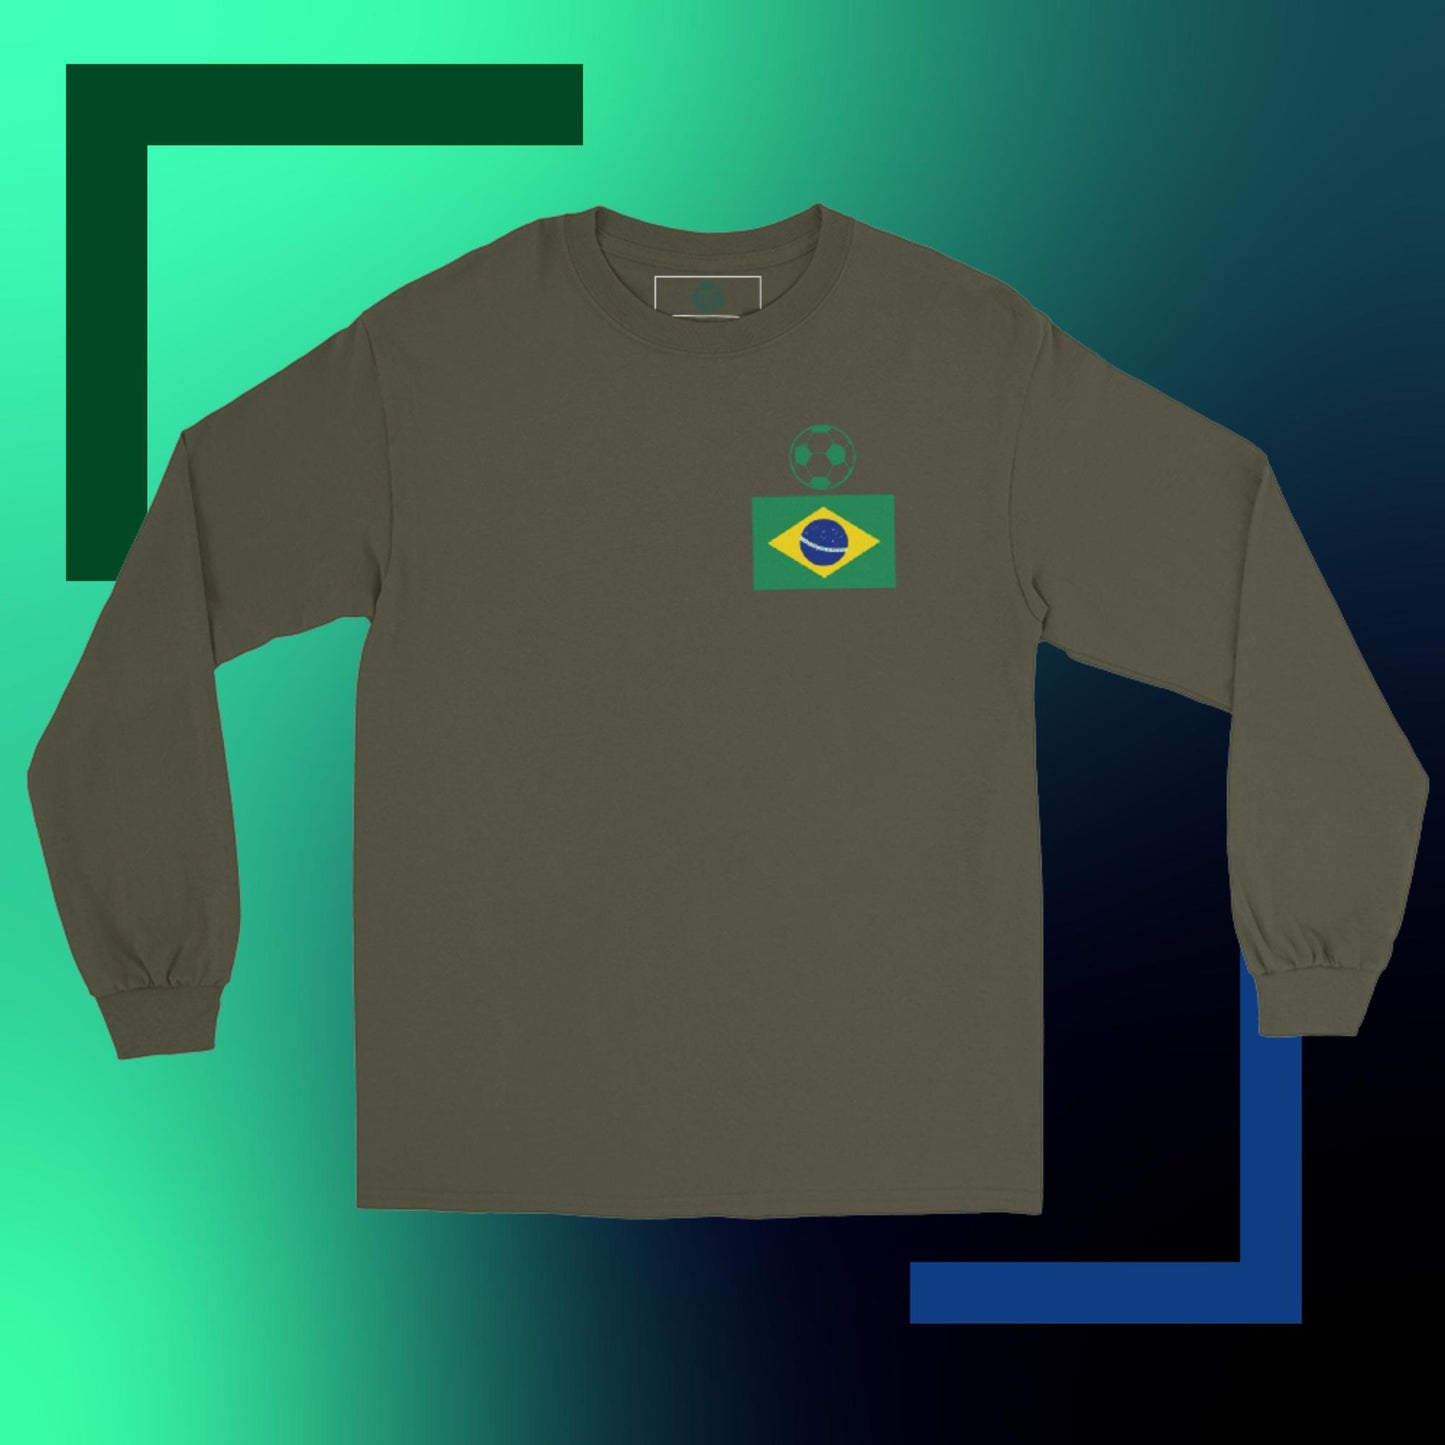 Sweet Science Sports Brazil Men’s Long Sleeve Shirt